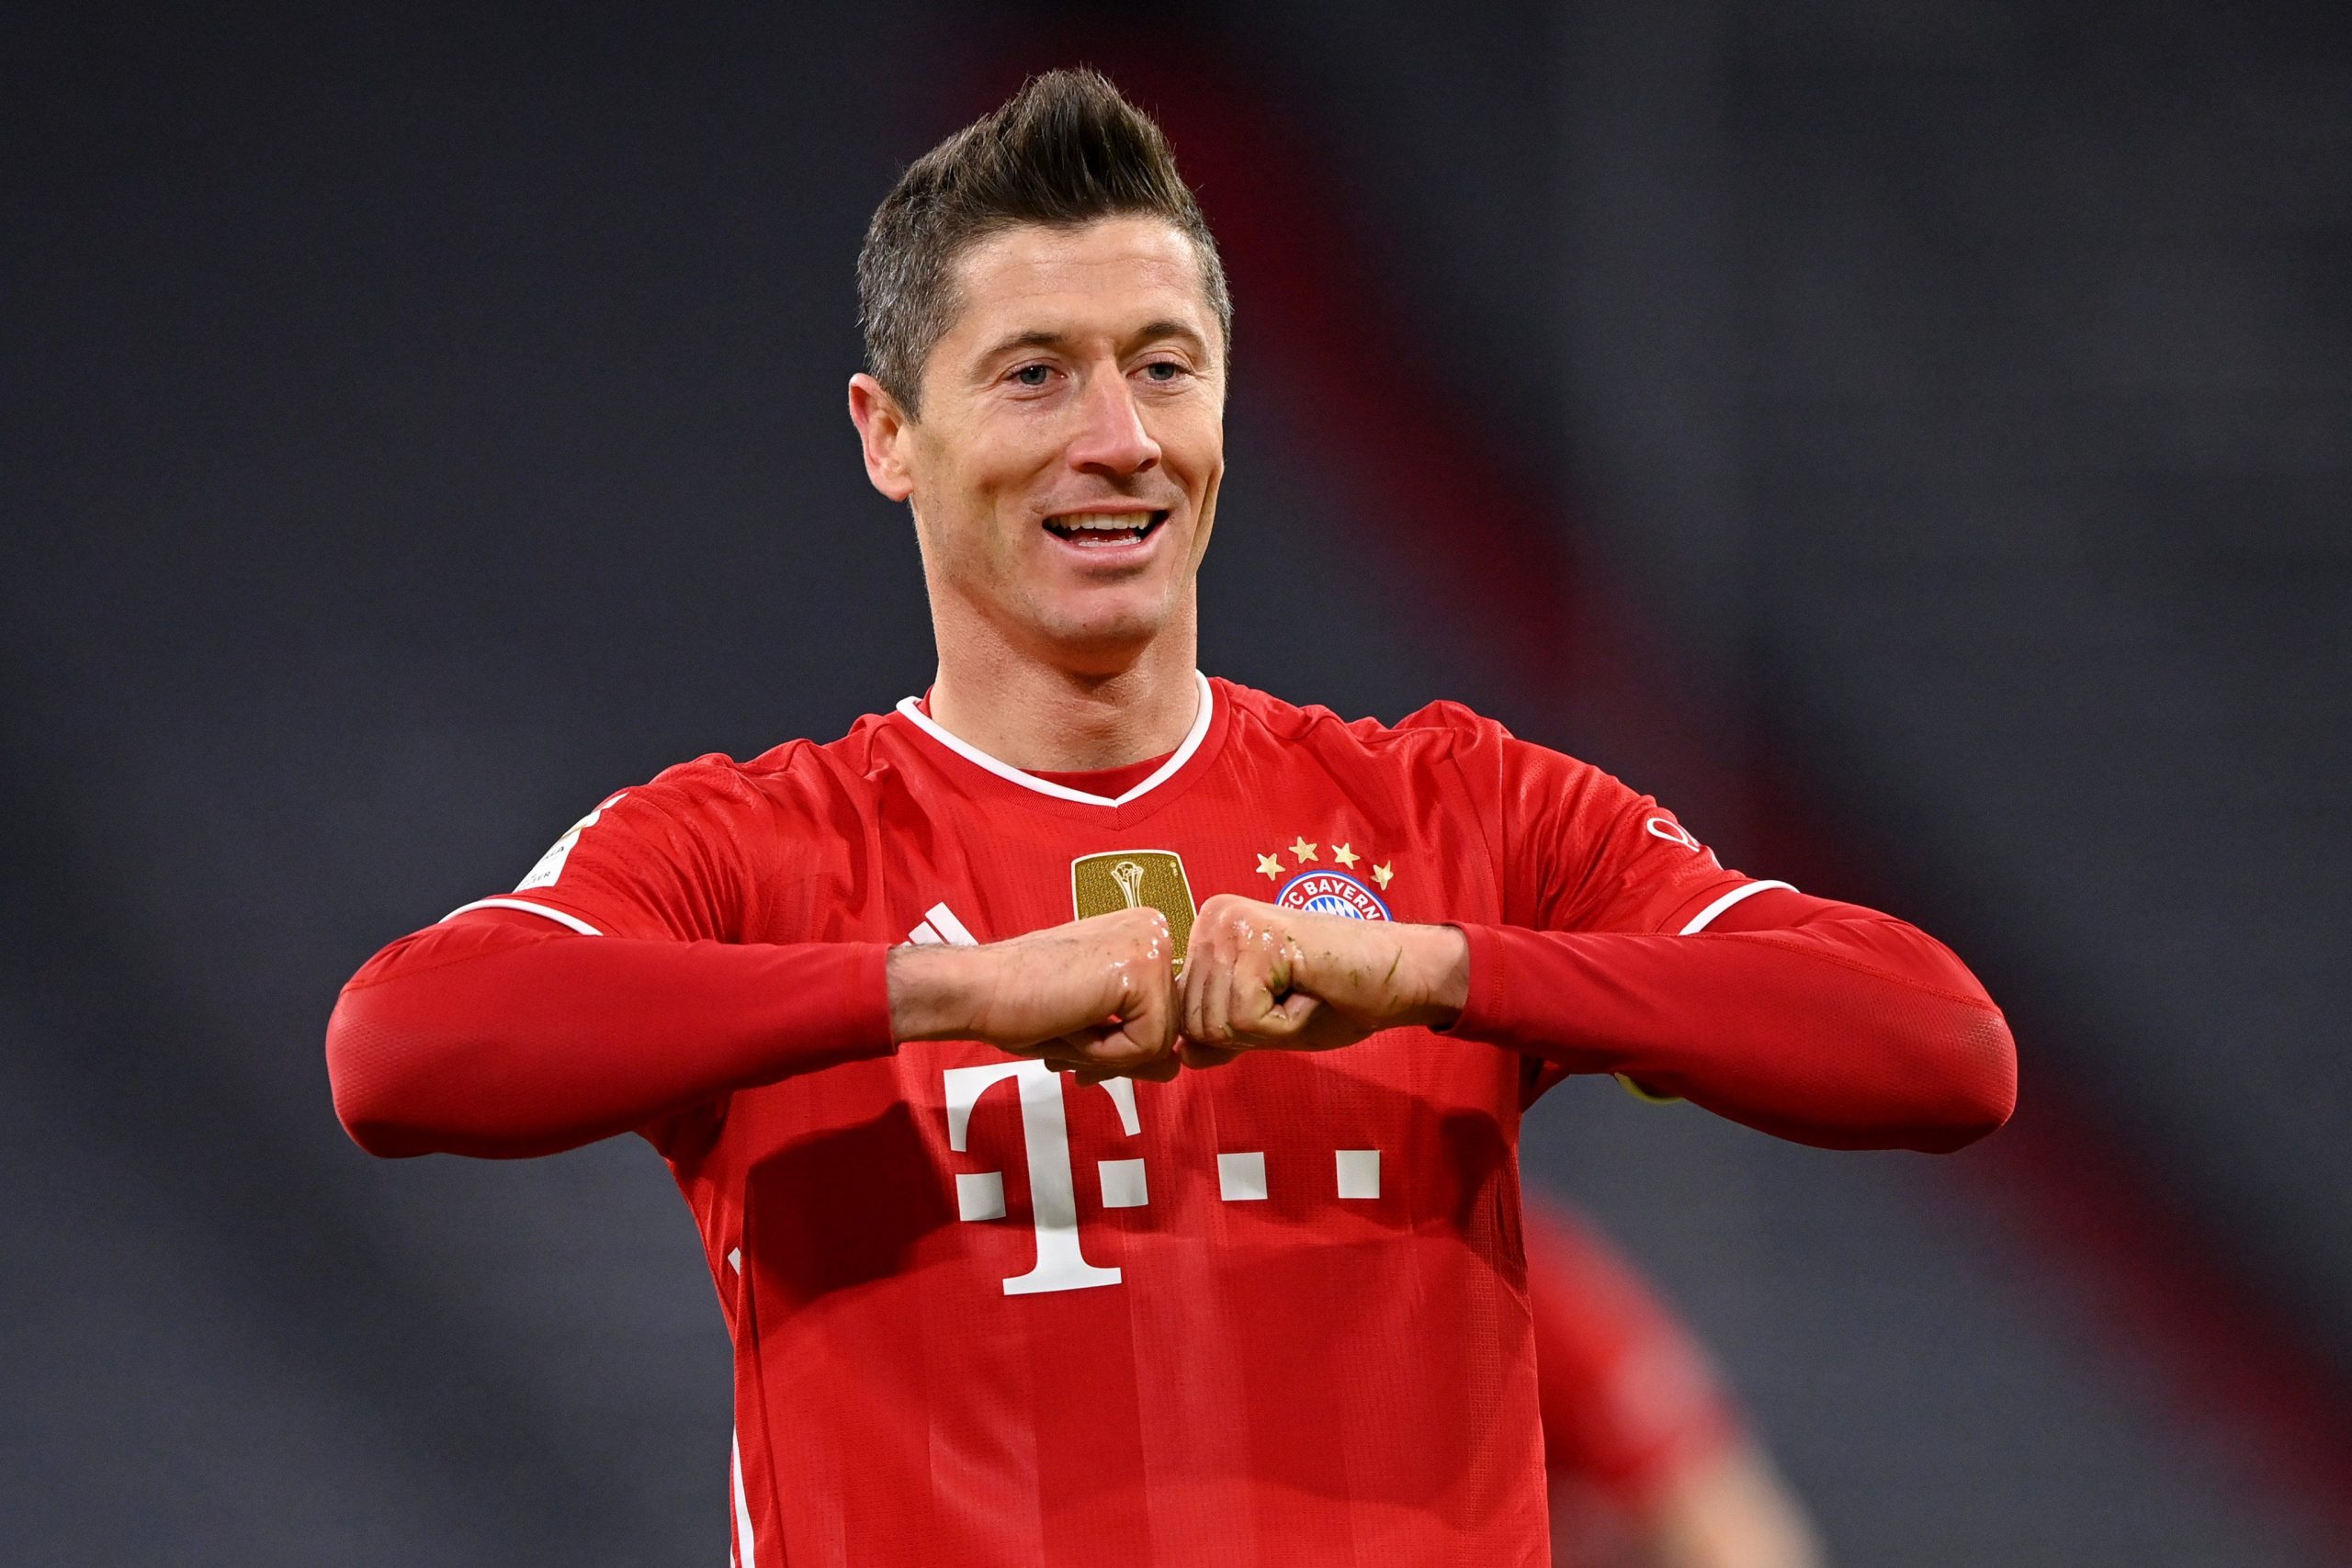 Barca-Lewandowski reach verbal agreement, but Bayern unwilling: Reports